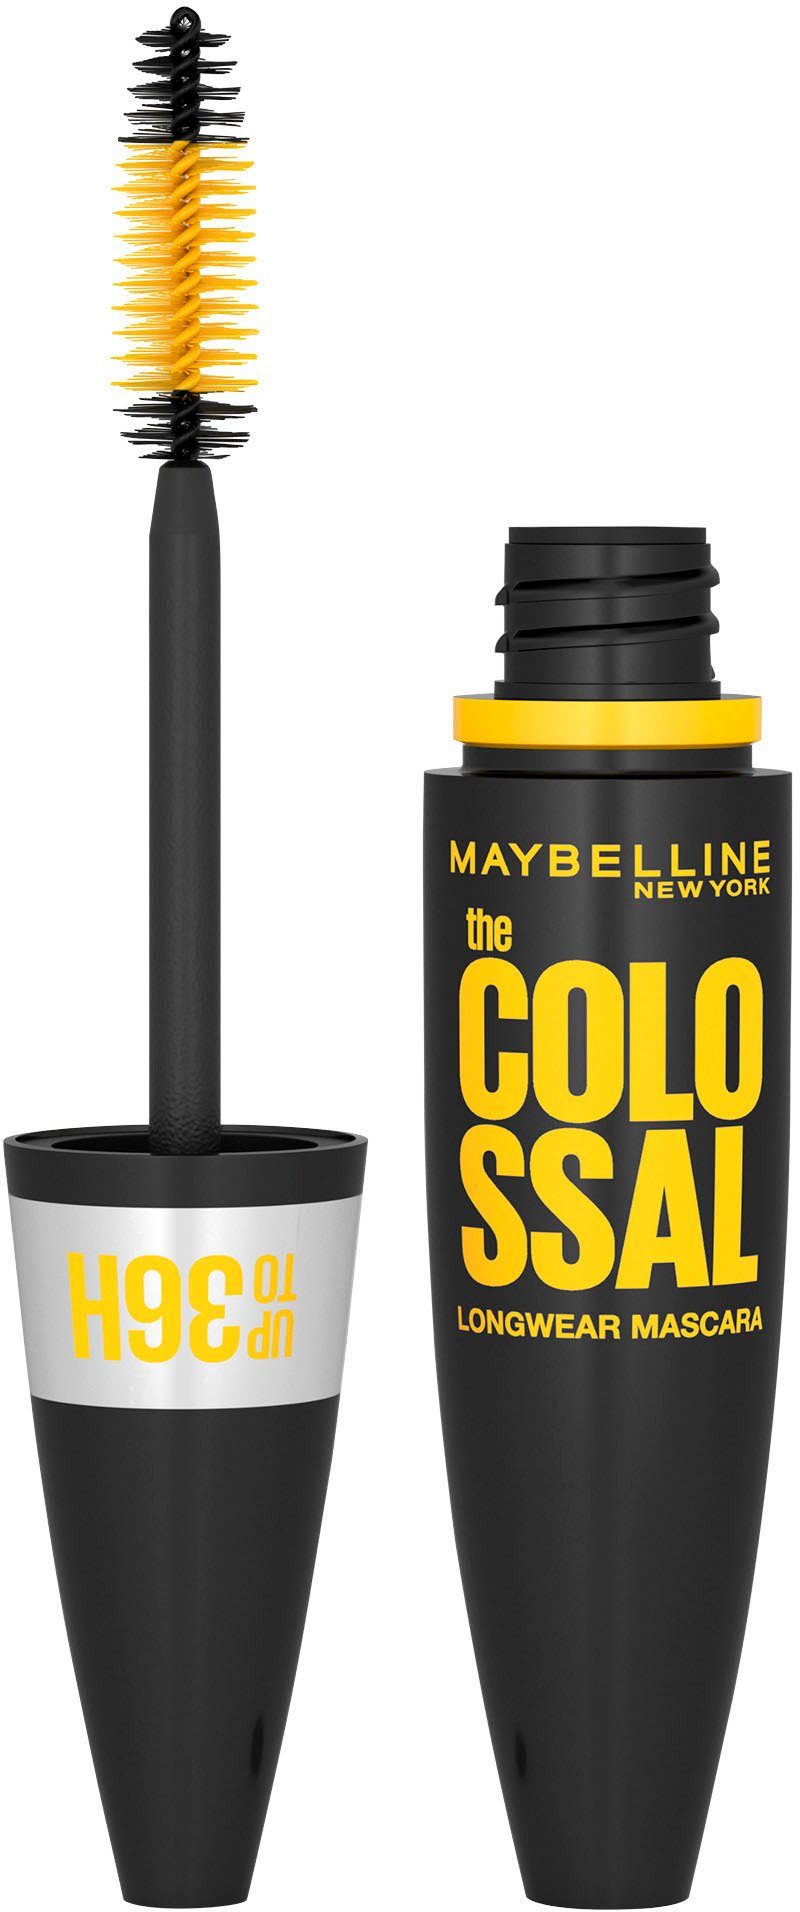 Colossal YORK 36H Mascara MAYBELLINE NEW Mascara